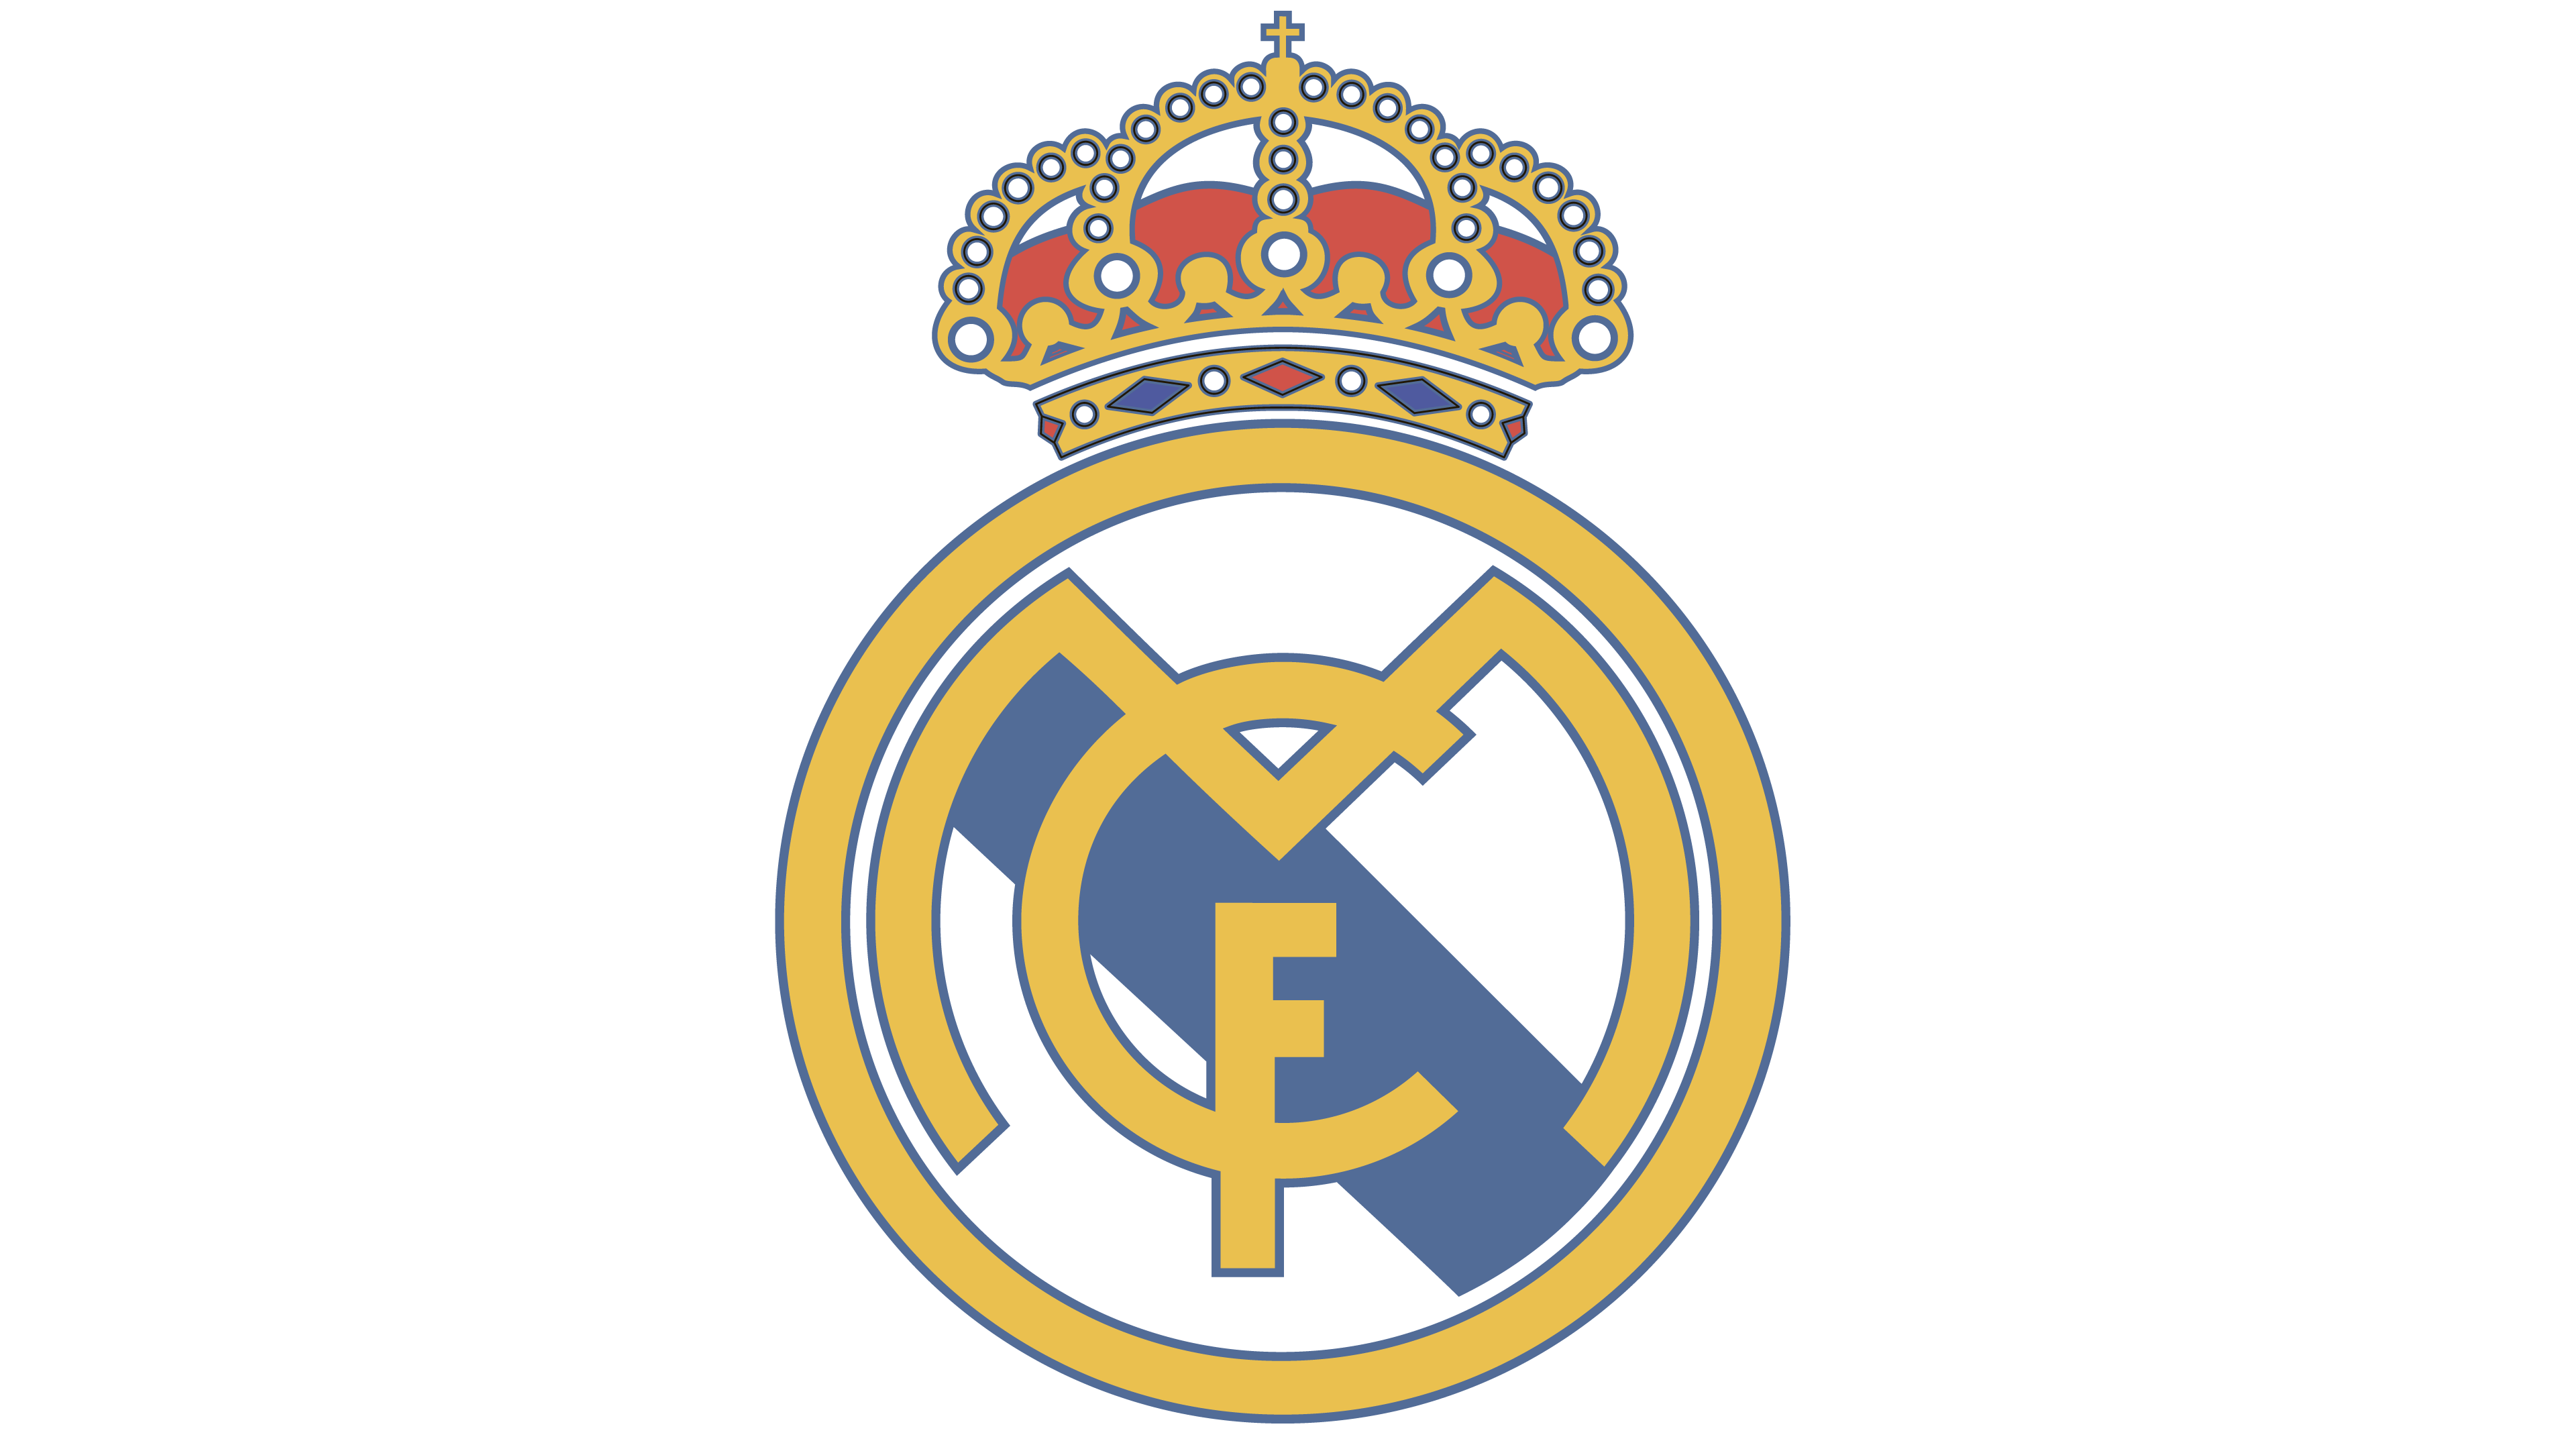 Real Madrid Logo - Real Madrid logo - Interesting History of the Team Name and emblem